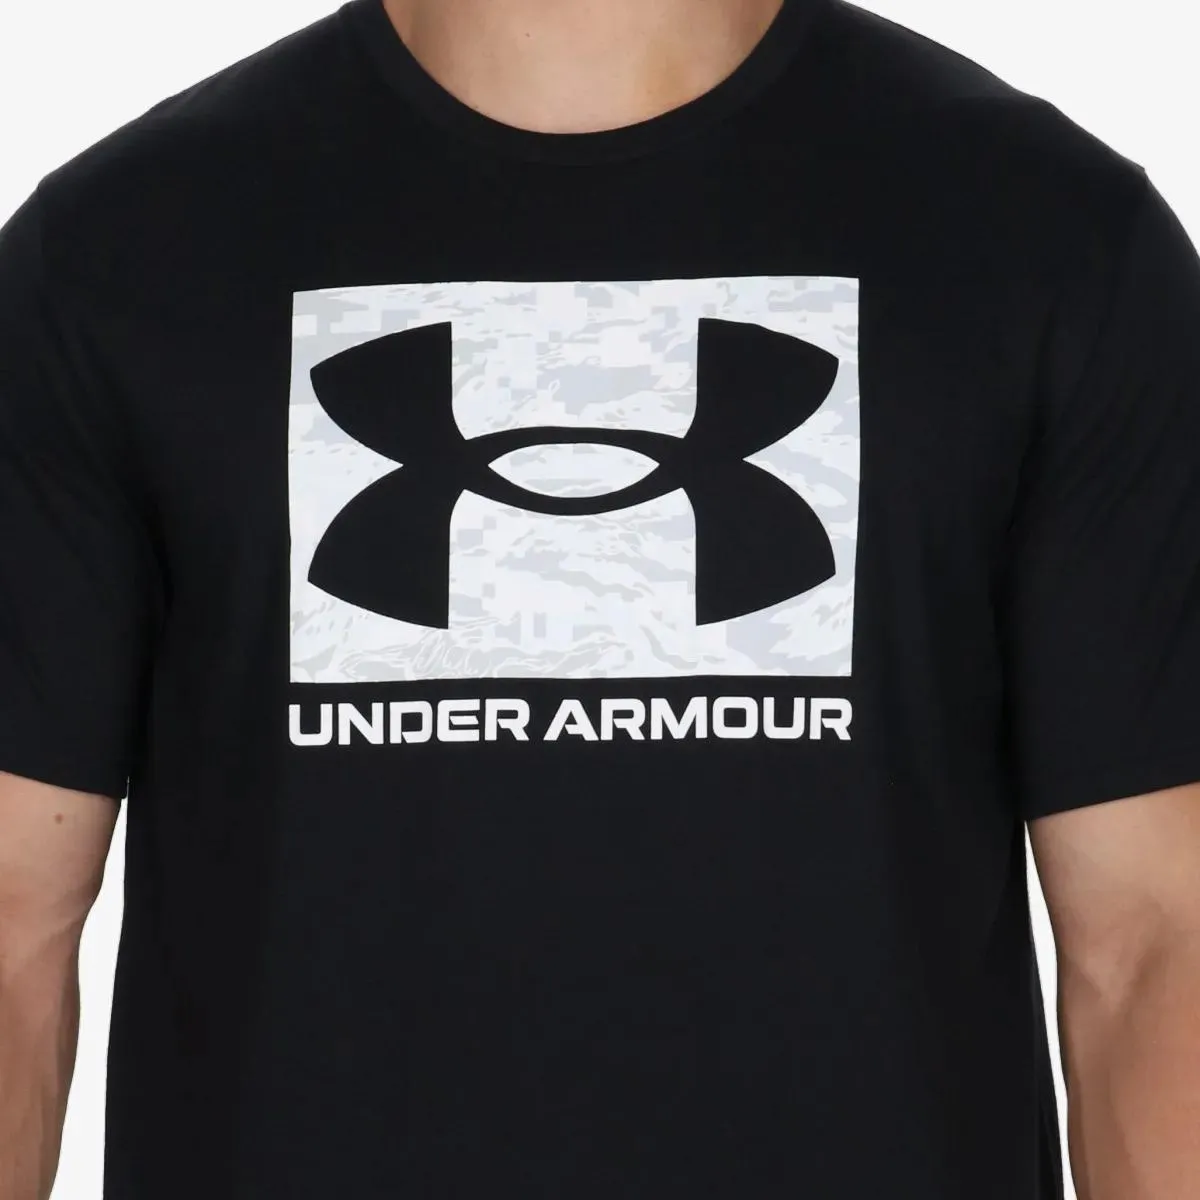 Under Armour T-shirt ABC 